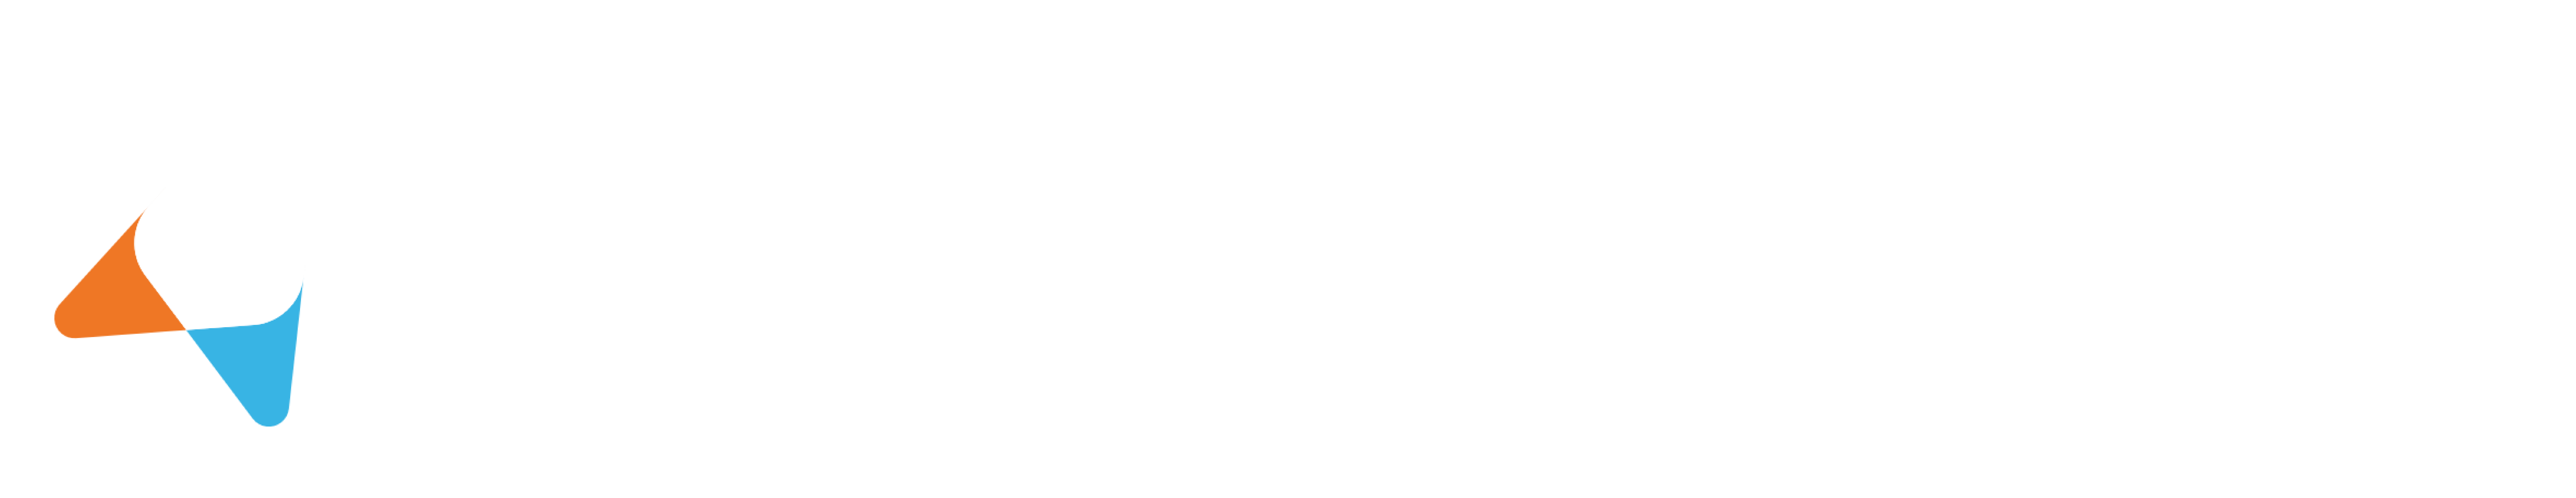 Social Climb Logo